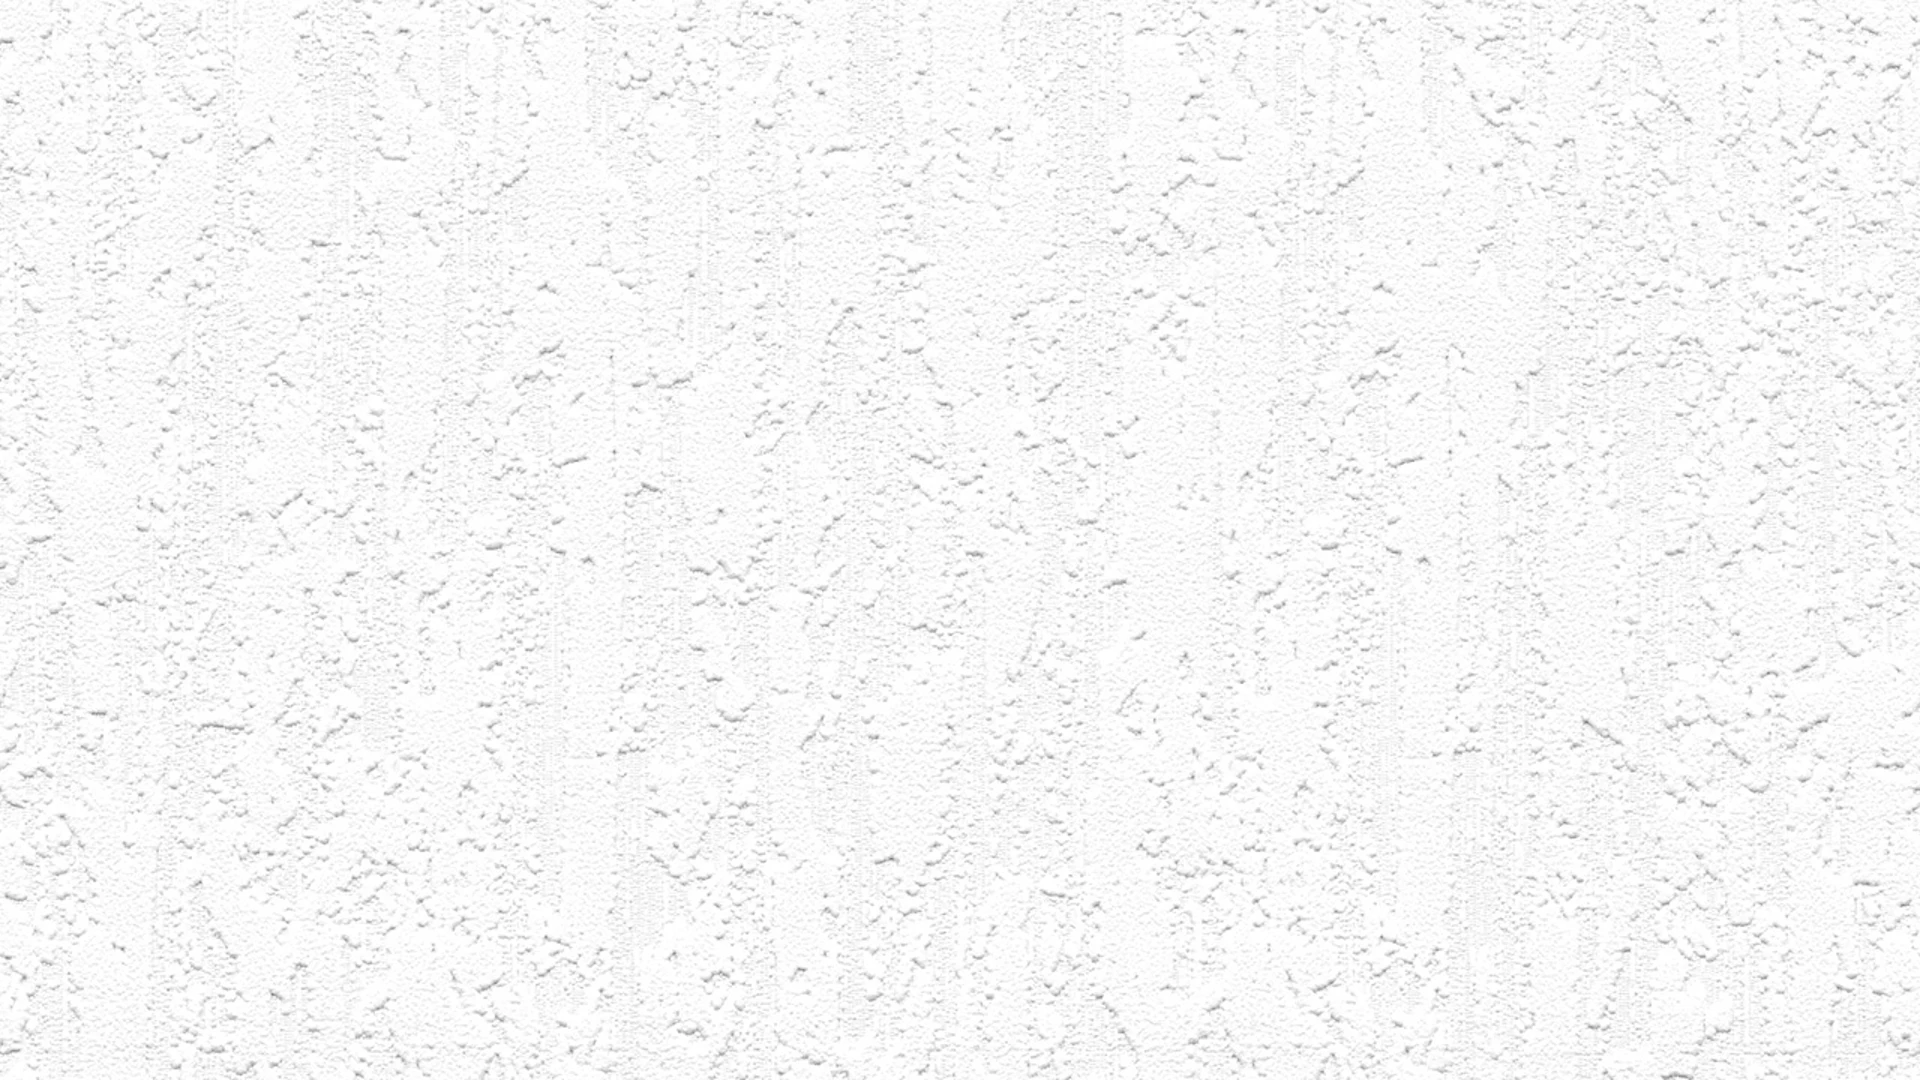 Vinyltapete Strukturtapete weiß Modern Klassisch Uni Simply White 910